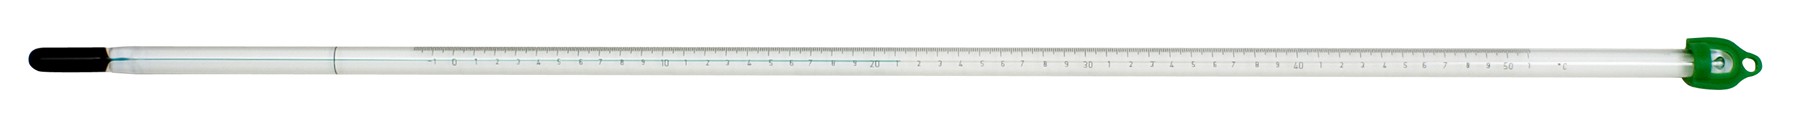 H-B DURAC Plus Precision Liquid-In-Glass Thermometer; -1 to 101C, 76mm Immersion, Organic Liquid Fill